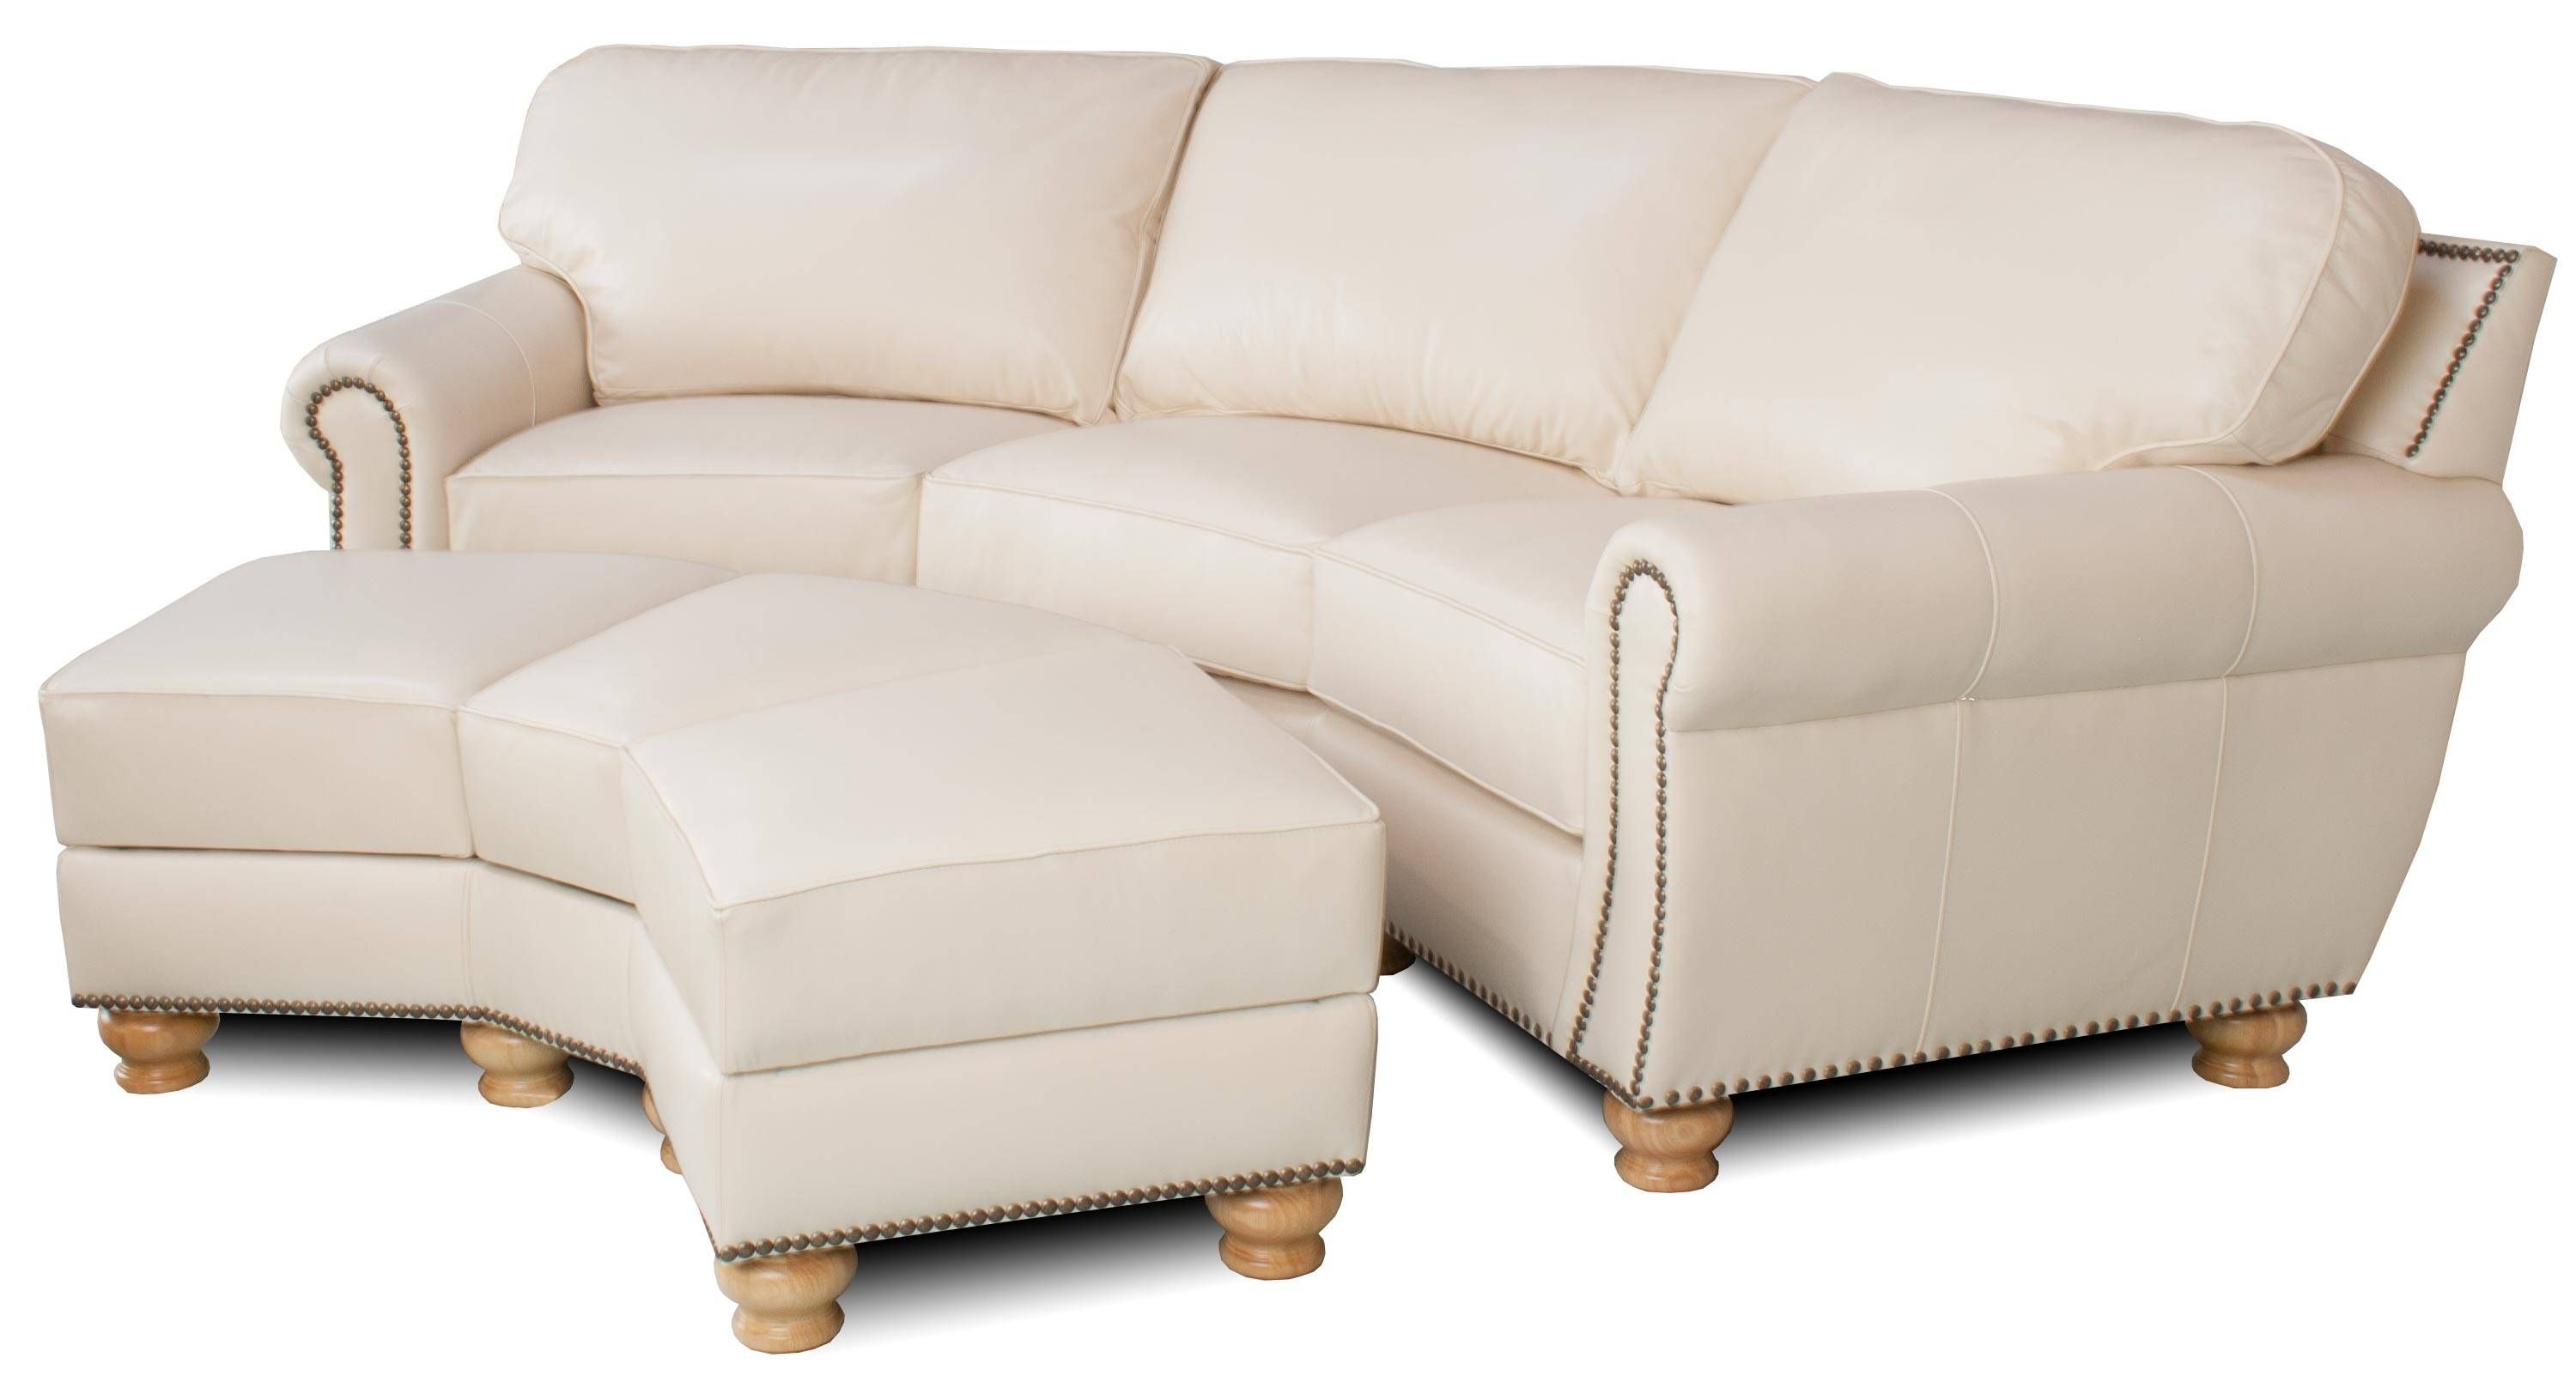 Angled Sofa Sectional – Leather Sectional Sofa With Regard To Angled Sofa Sectional (View 3 of 30)